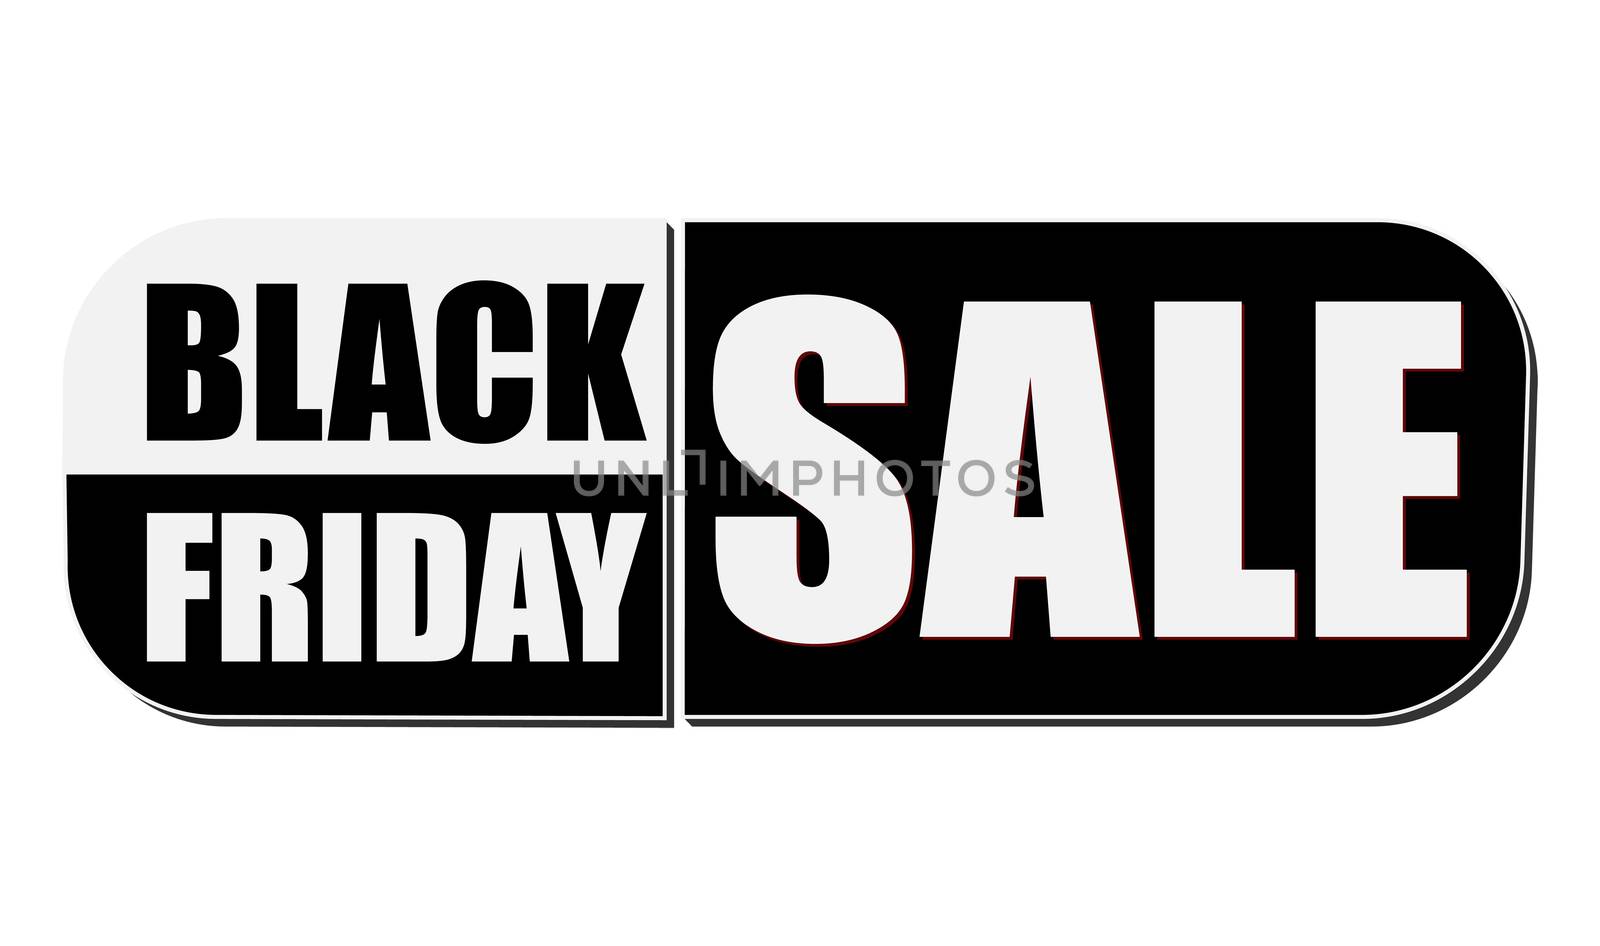 black friday sale - elliptic flat design label, business holiday commerce concept